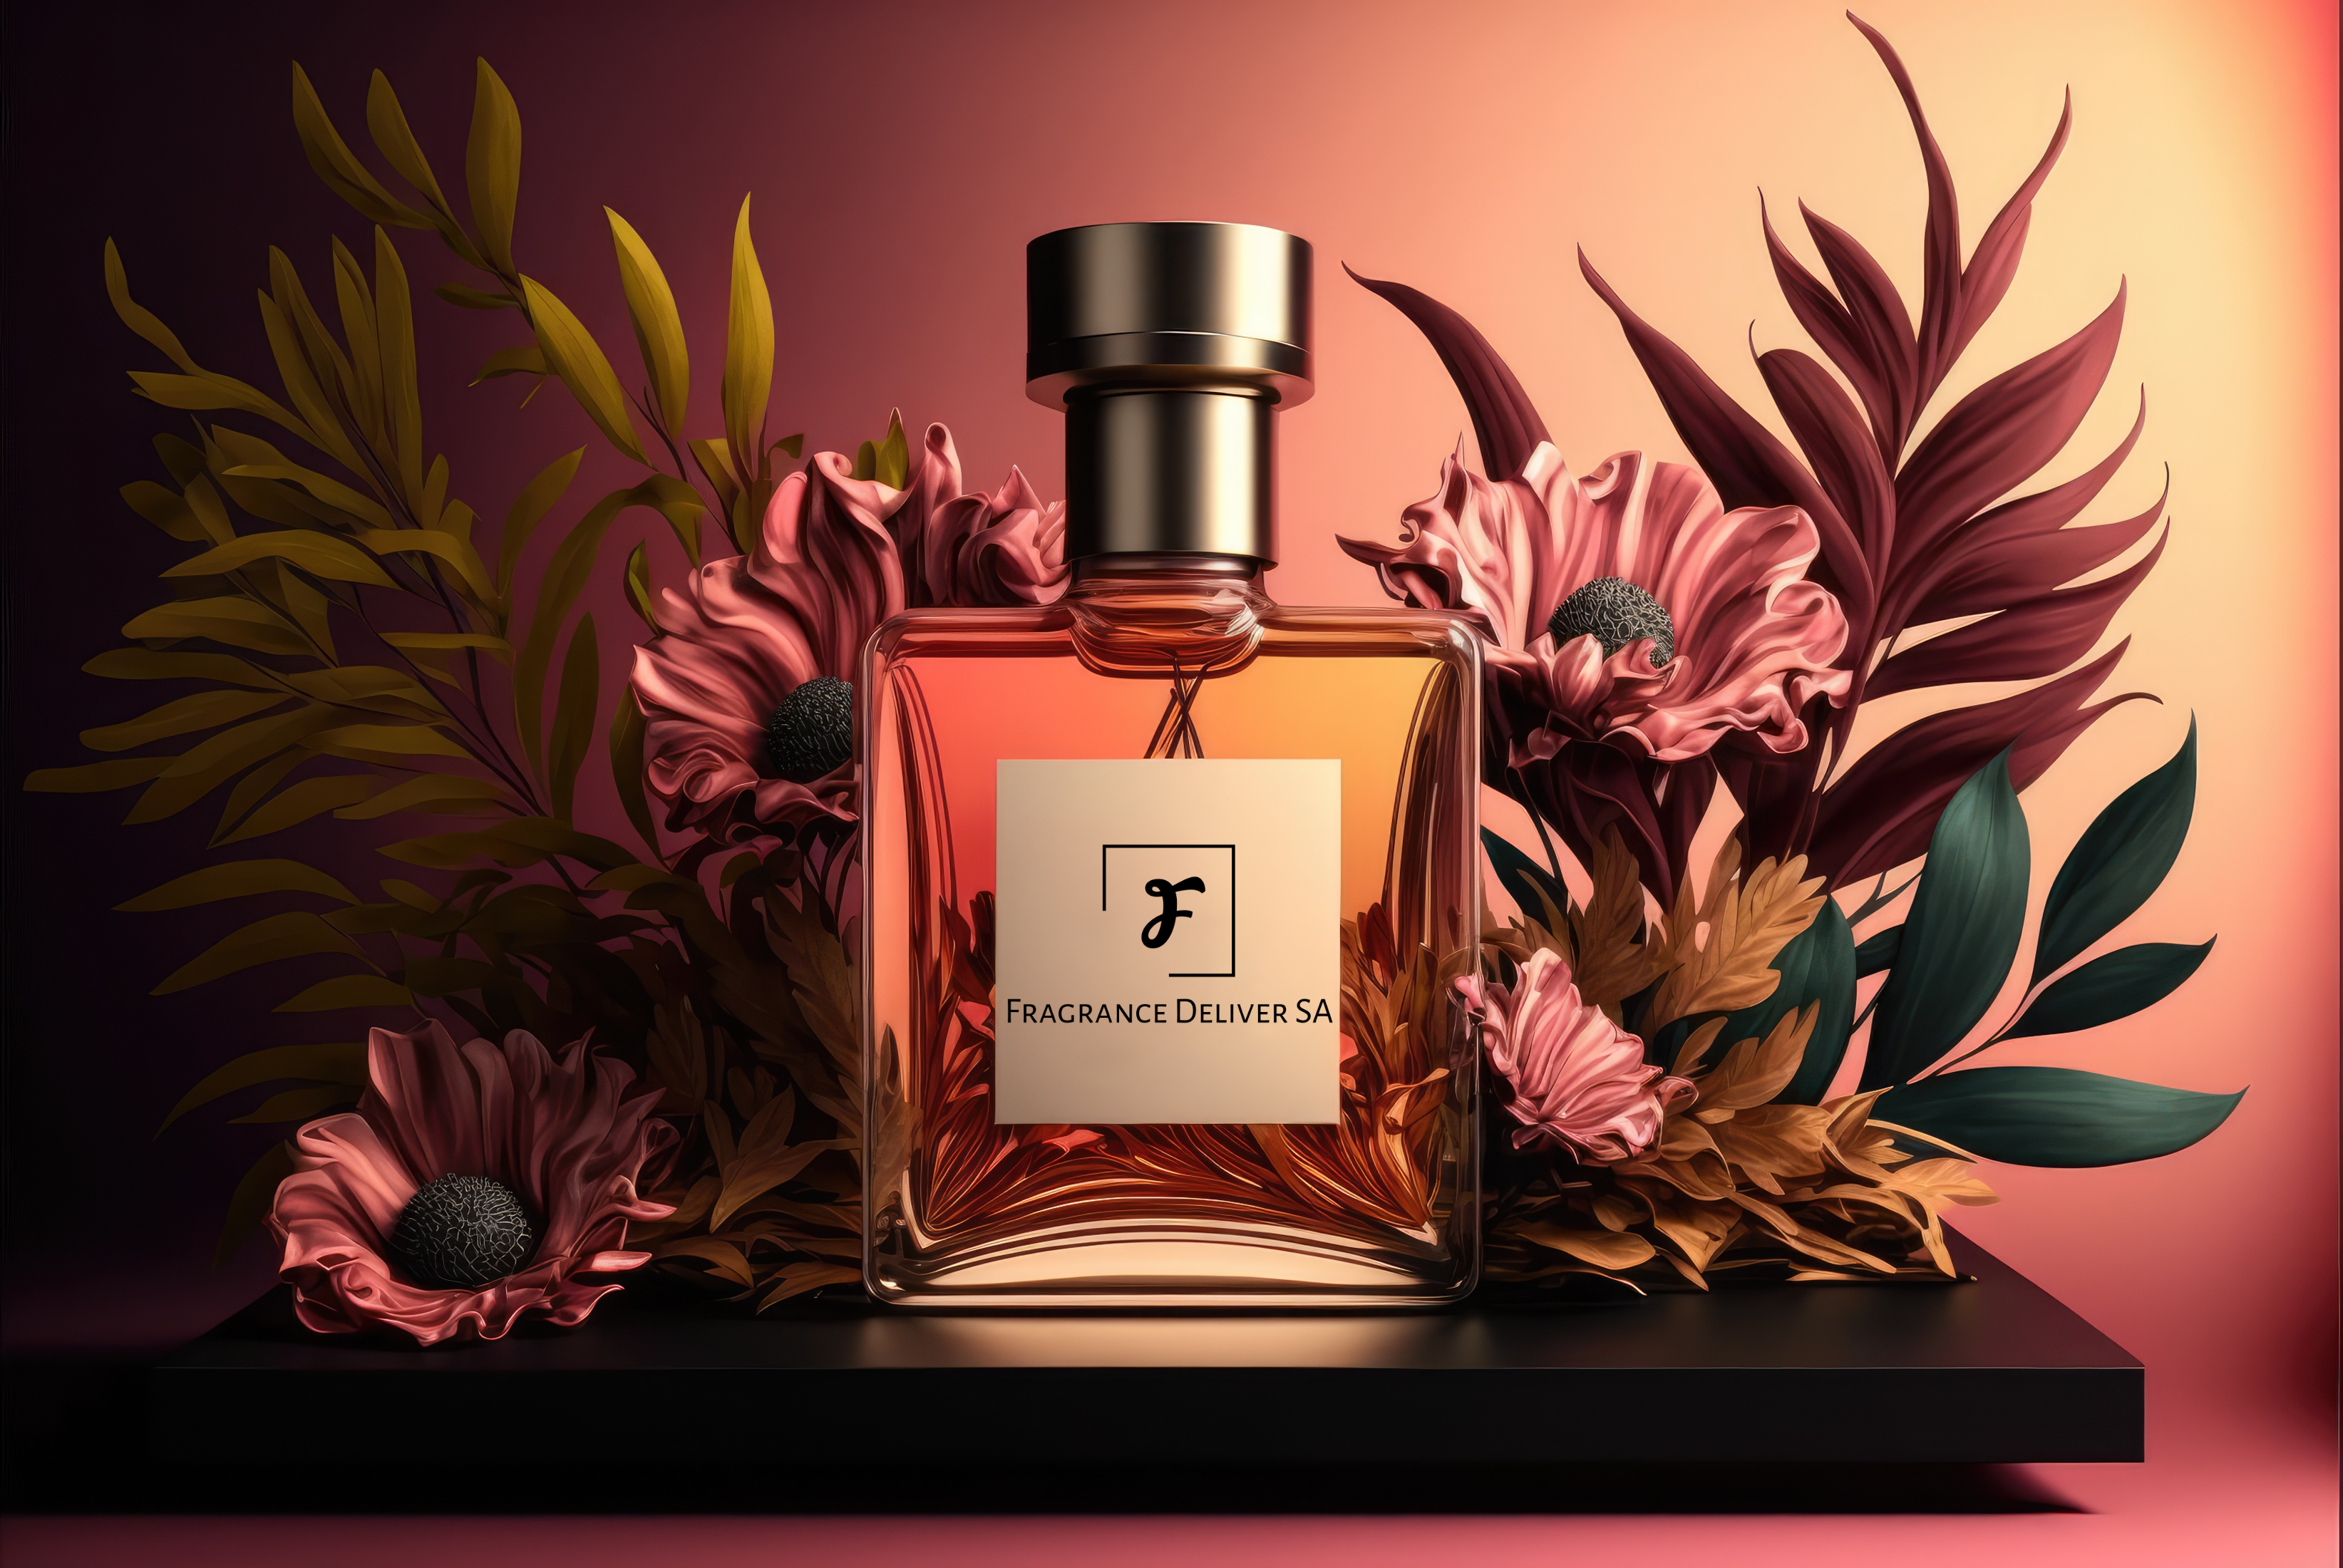 Louis Vuitton fragrances any good? : r/fragrance